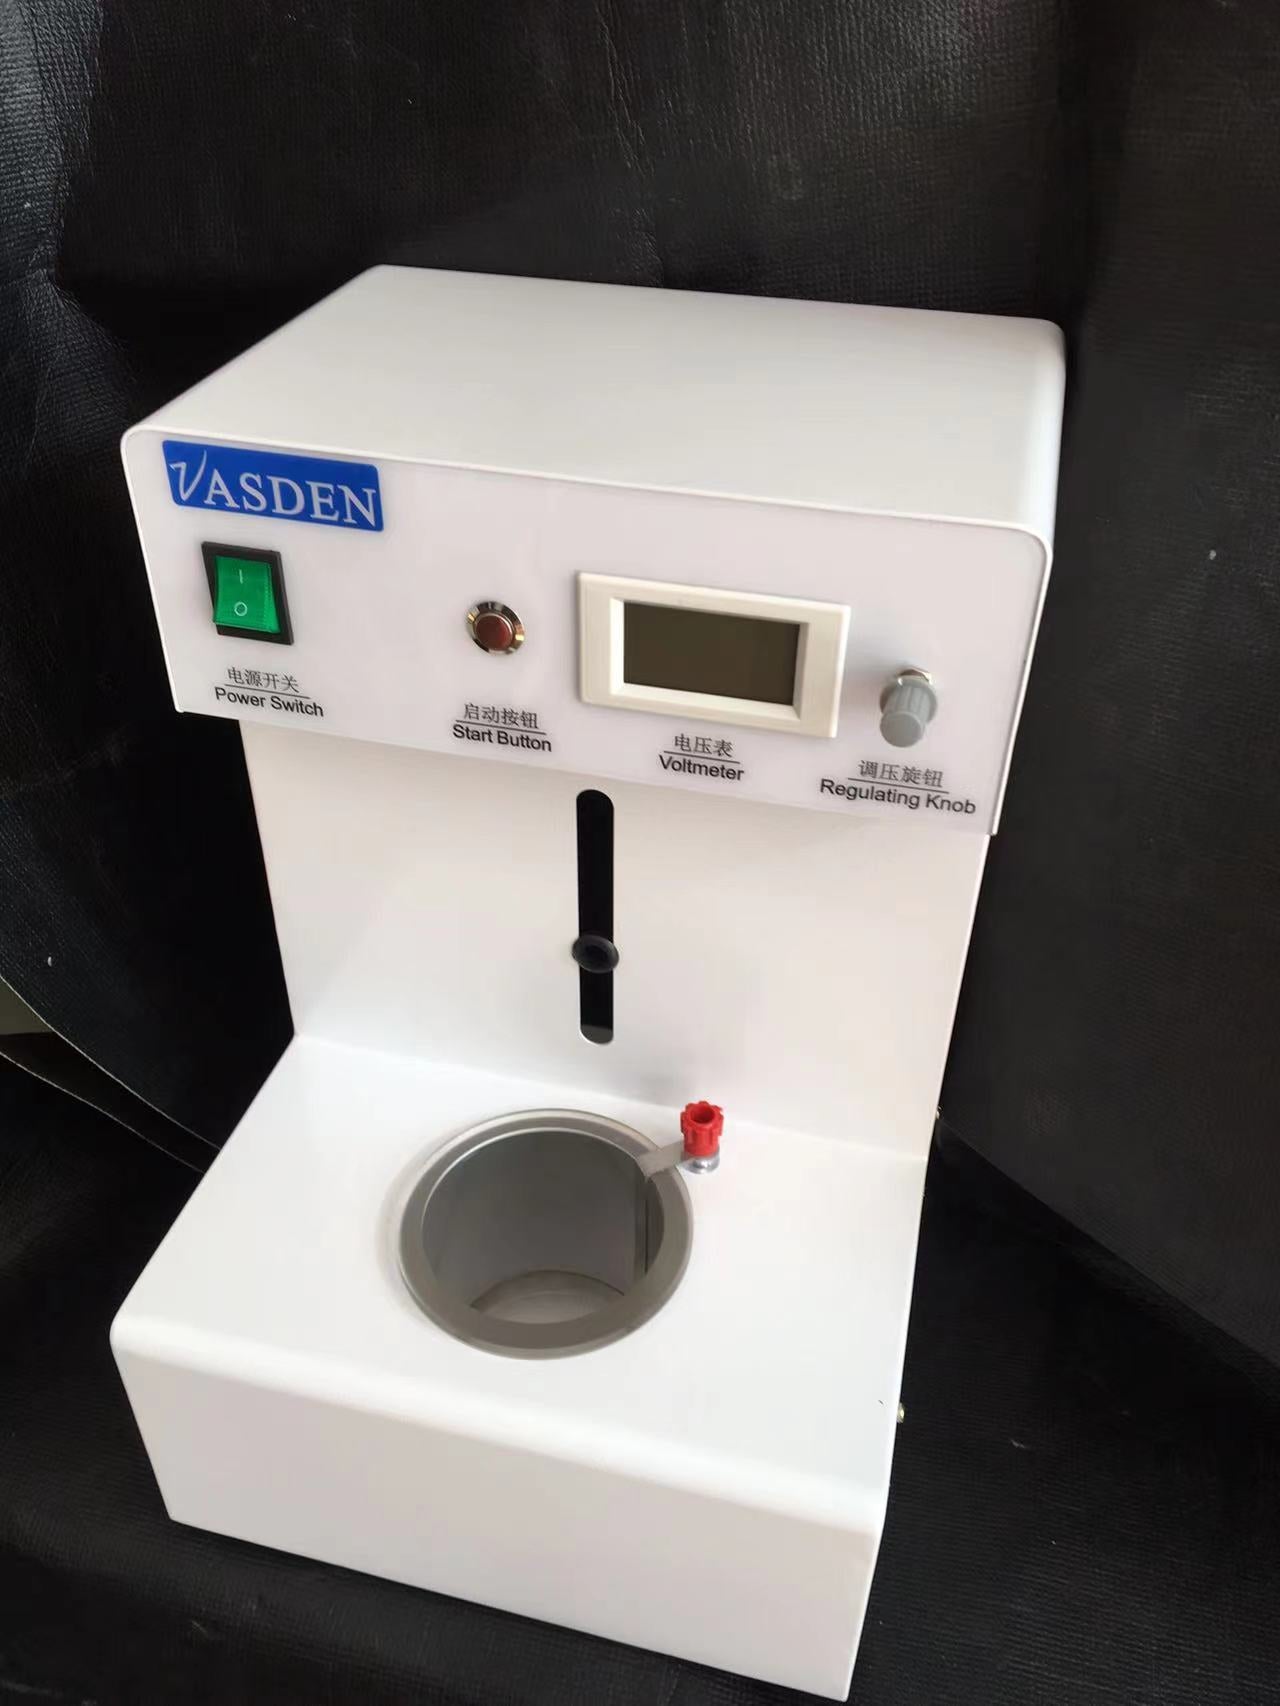 VASDEN Implant Abutment Electro Plating Color Pure Titanium Electroplating instrument Machine For Dental Lab